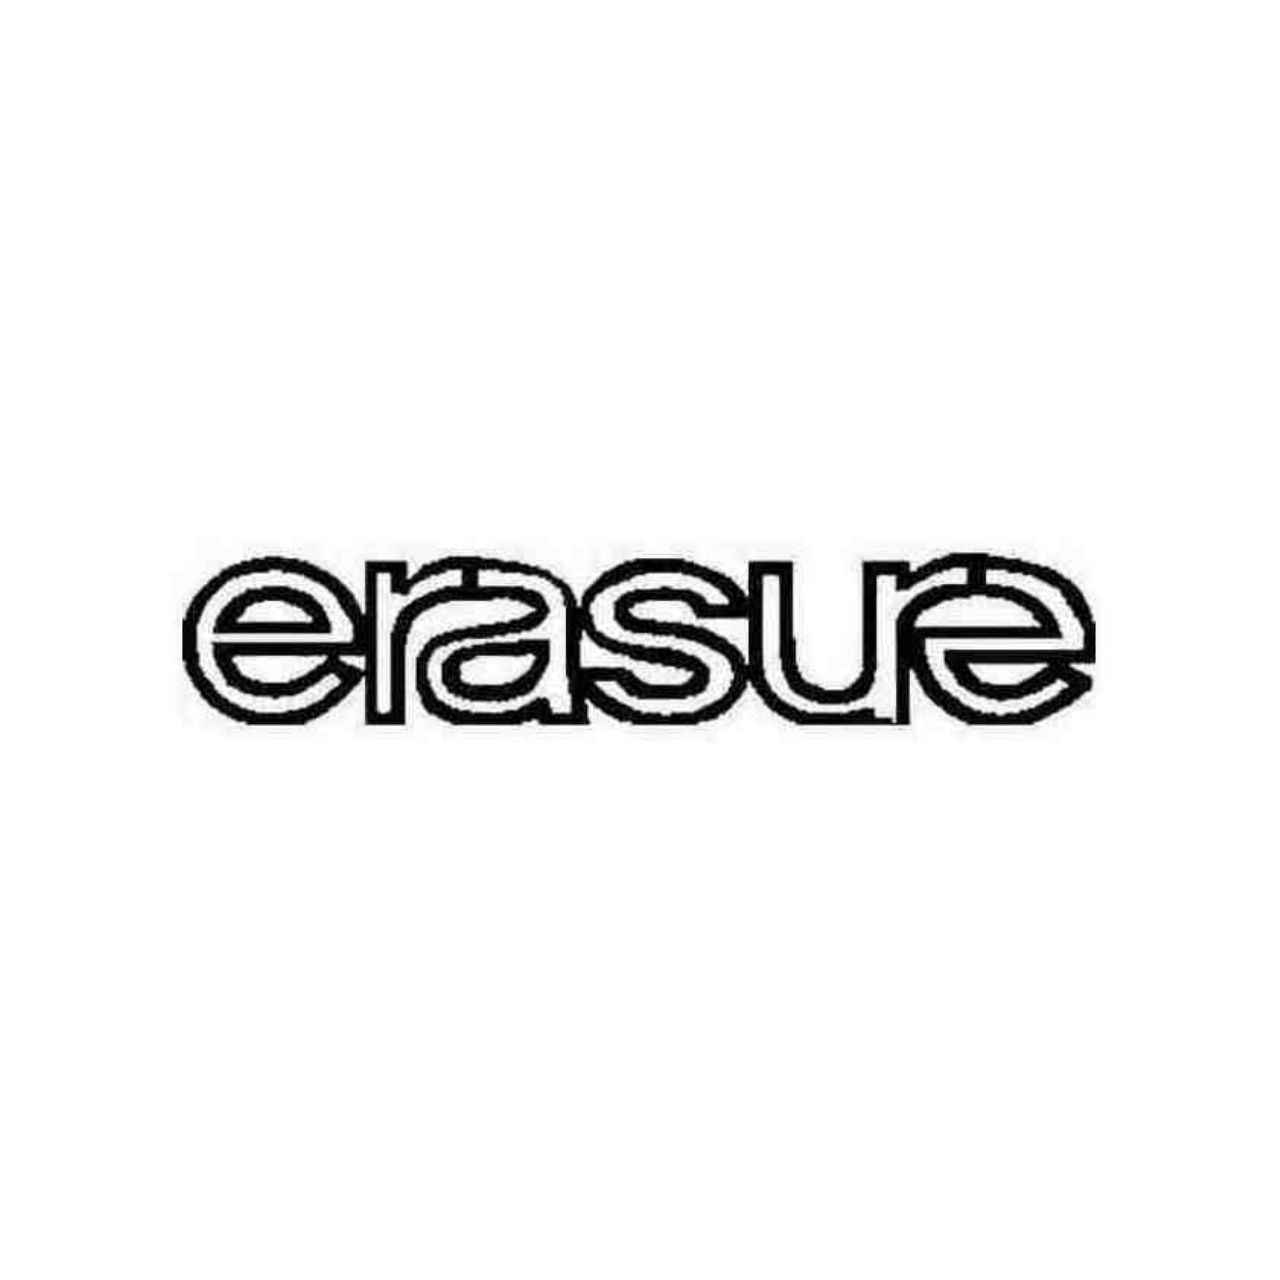 Erasure Logo - Erasure Decal Sticker